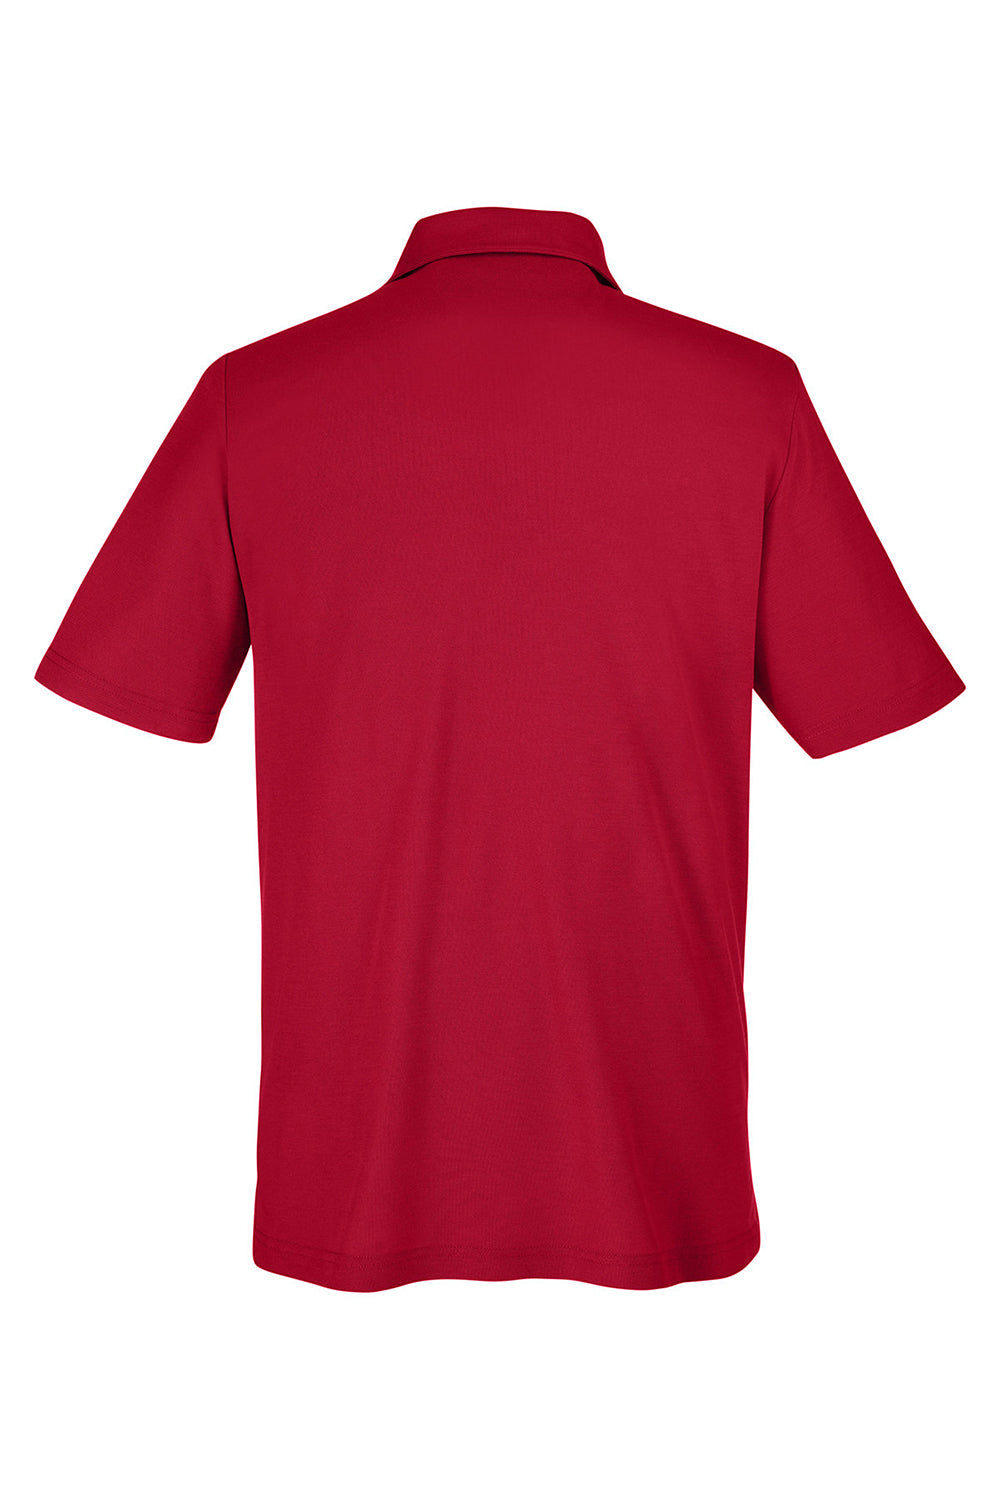 Core 365 CE112 Mens Fusion ChromaSoft Performance Moisture Wicking Short Sleeve Polo Shirt Classic Red Flat Back